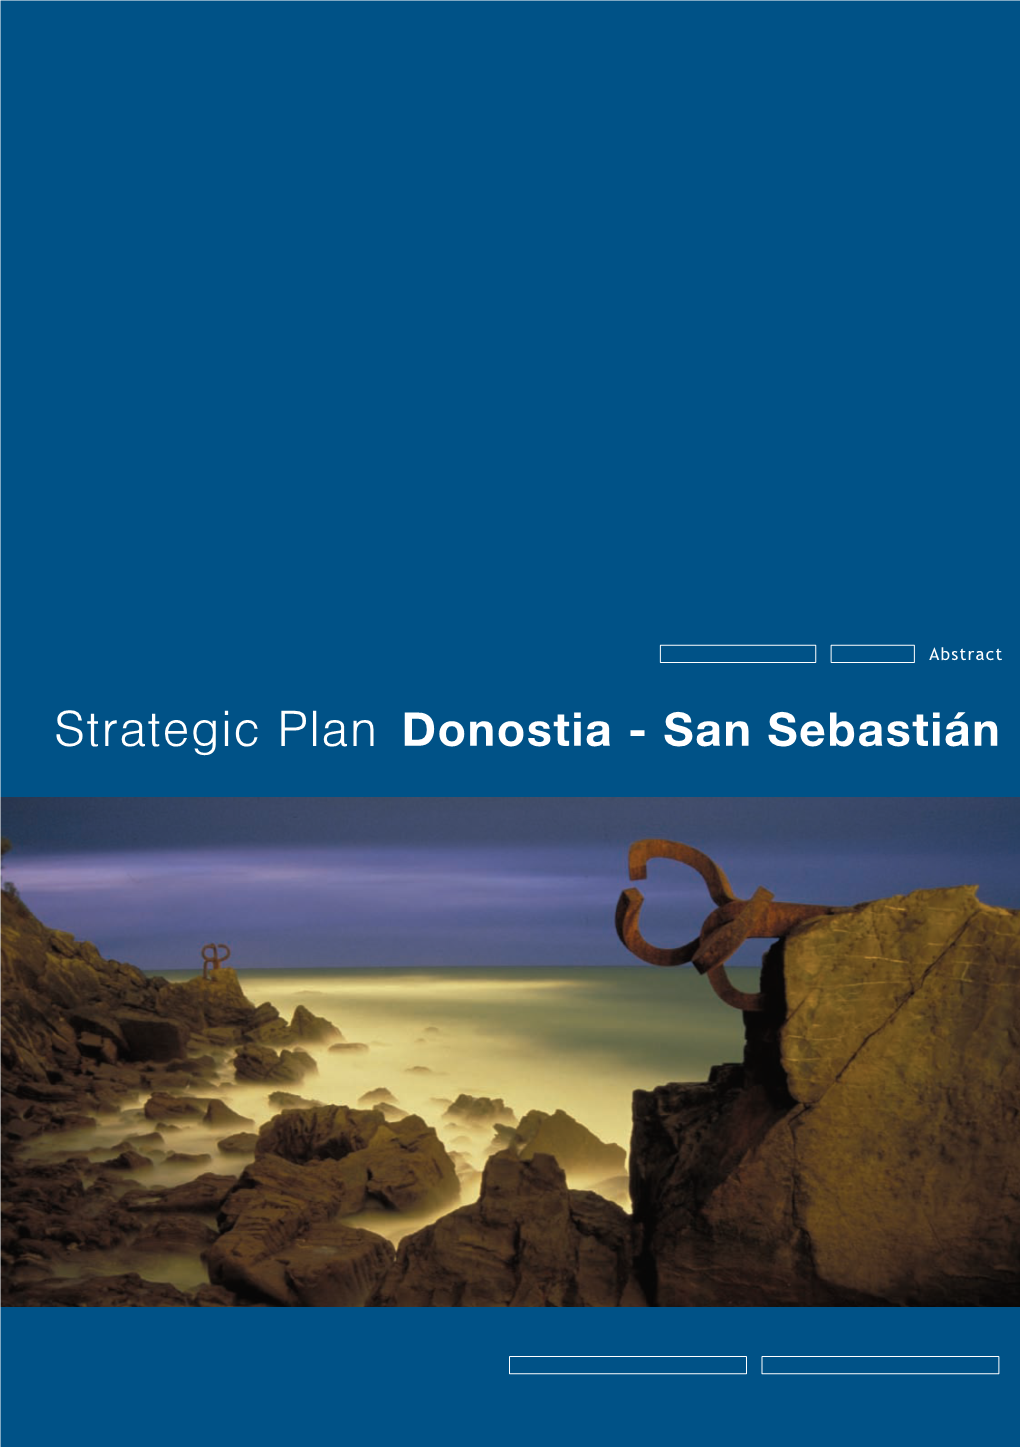 Strategic Plan Donostia - San Sebastián Strategic Plan Donostia - San Sebastián Summary